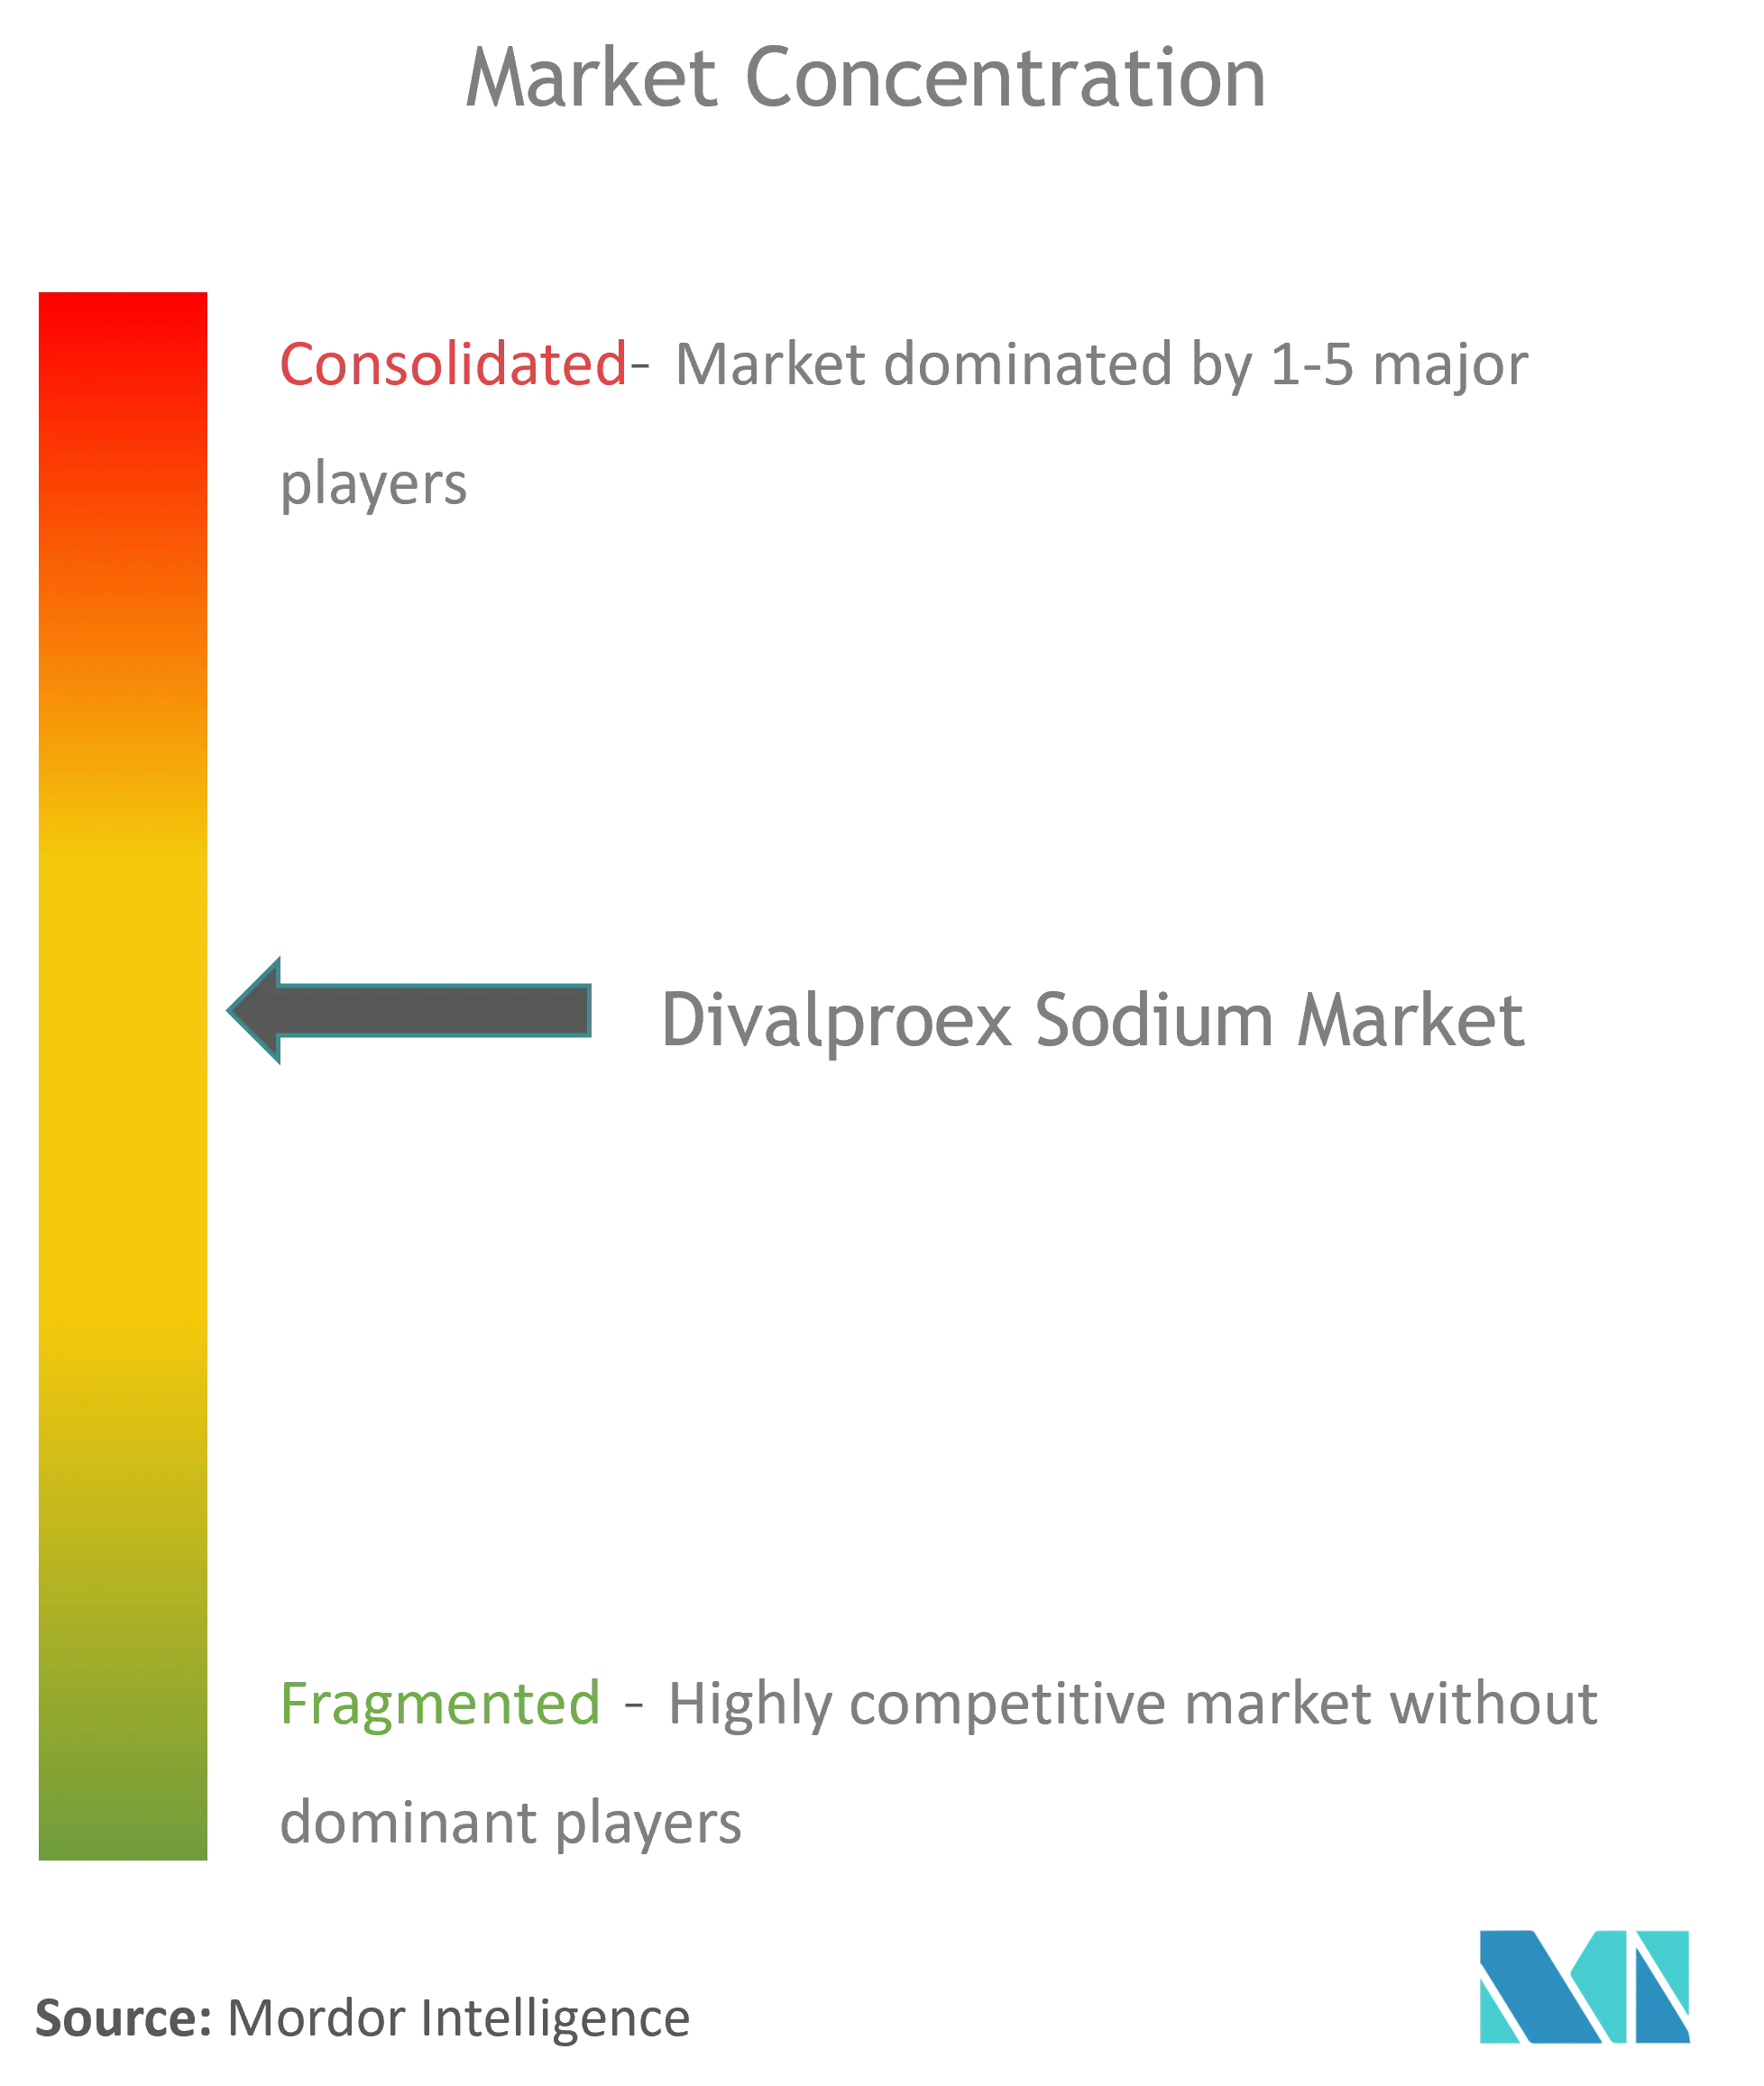 Global Divalproex Sodium Market Concentration